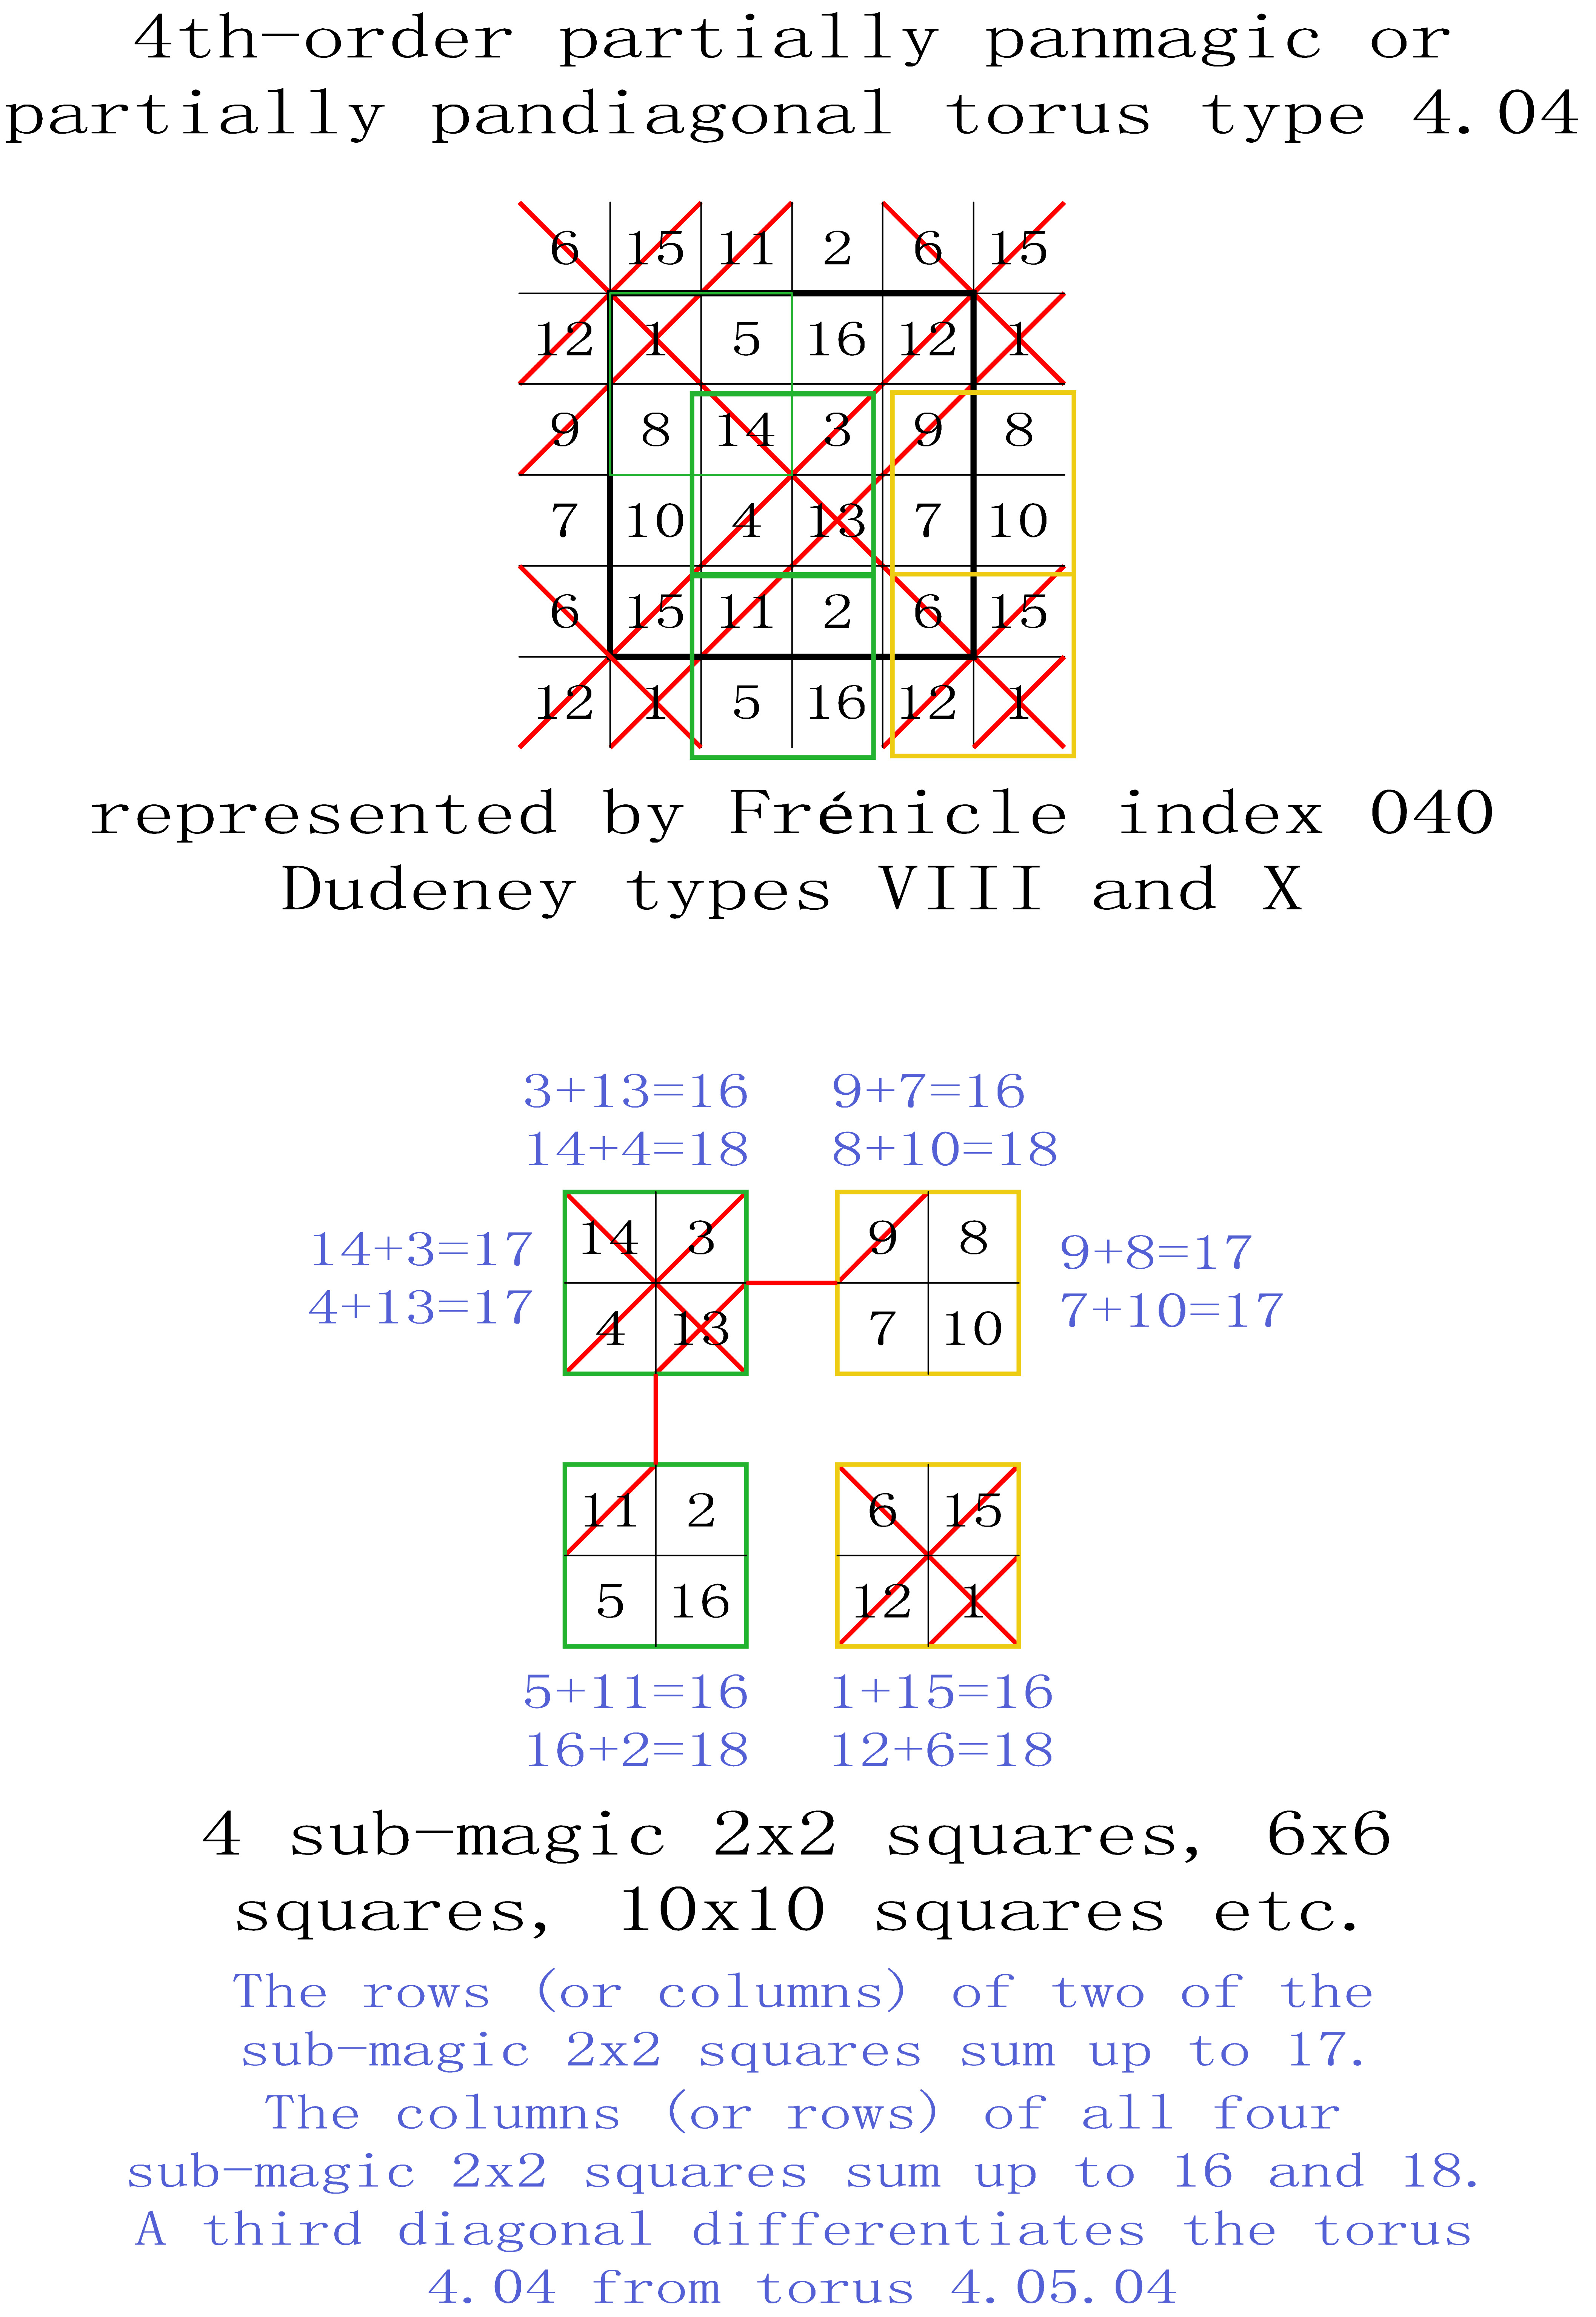 order 4 partially pandiagonal magic torus type T4.04 sub-magic 2x2 squares